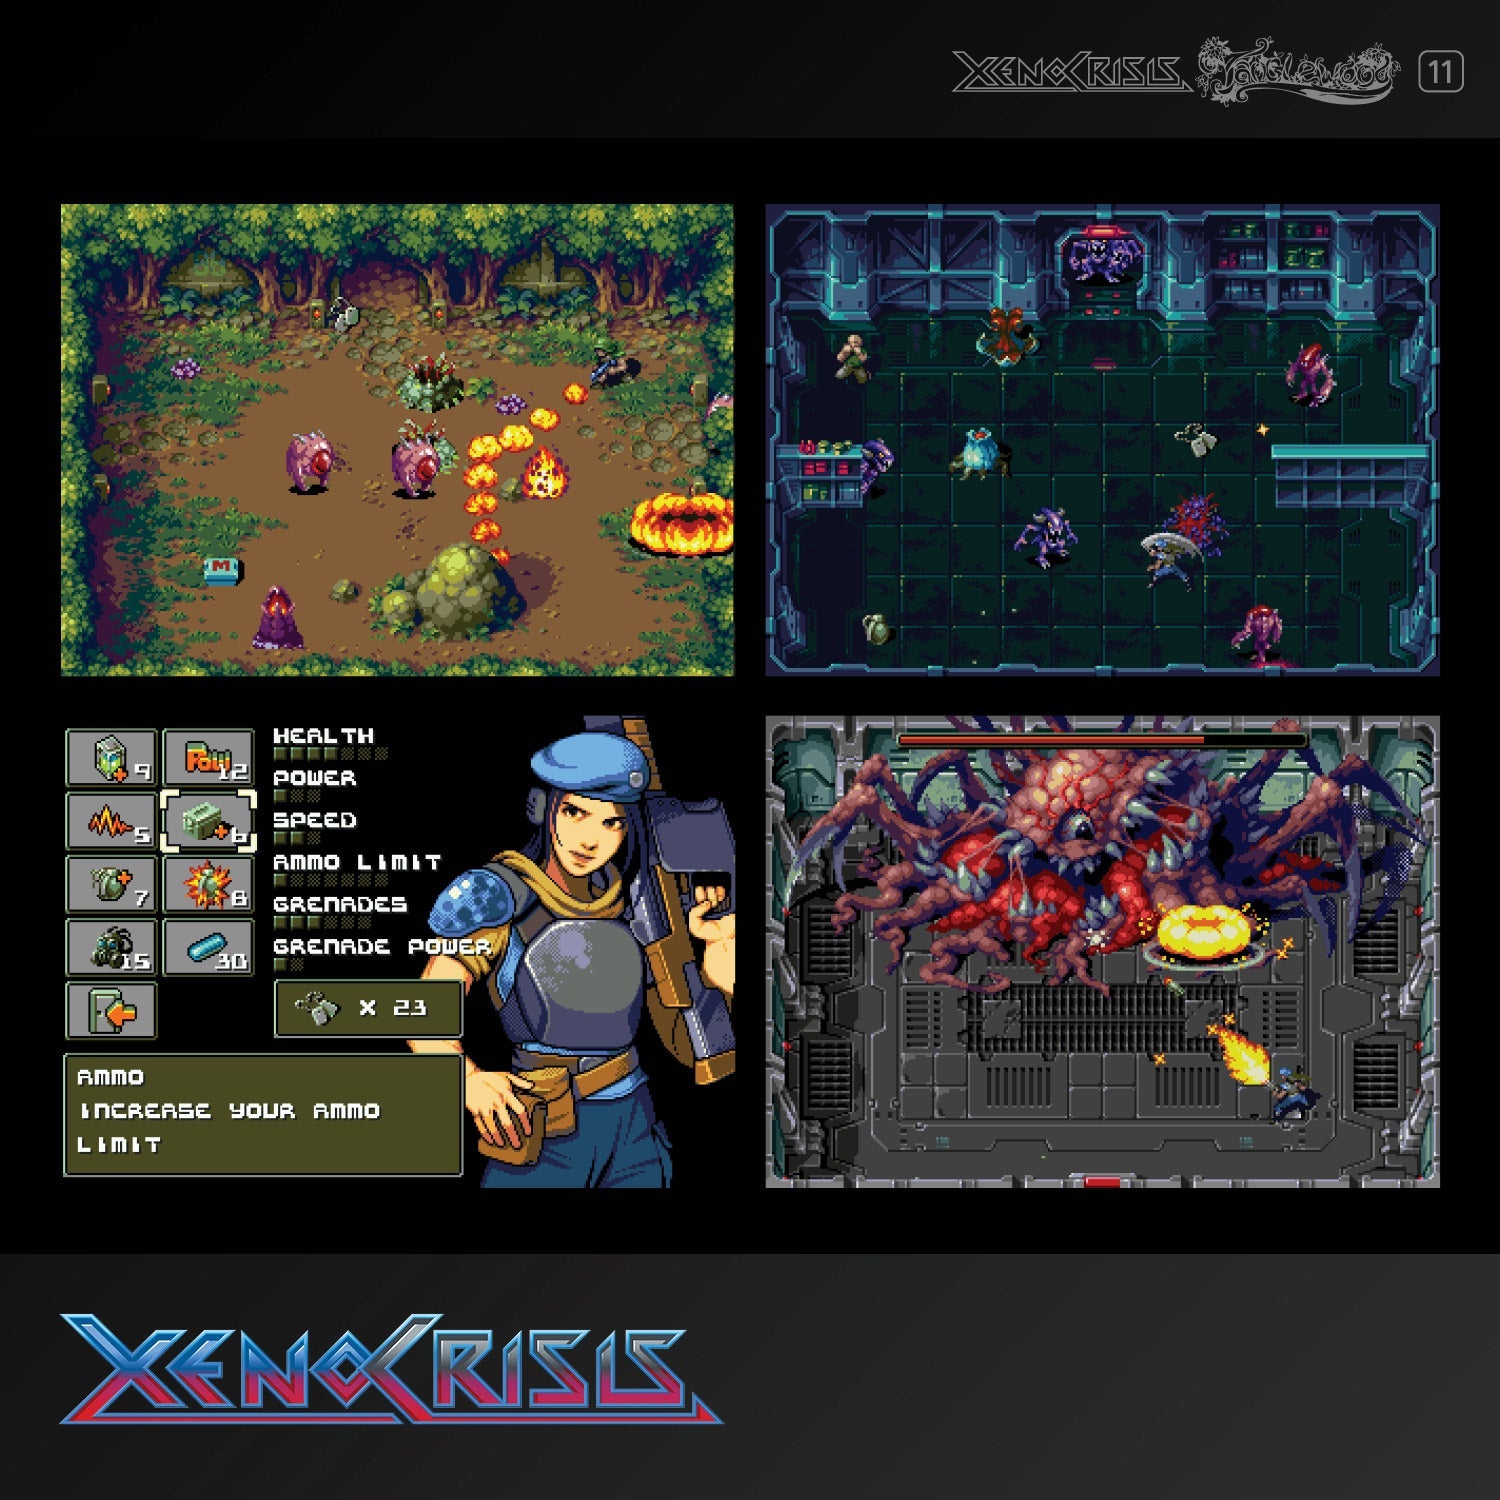 #11 Xeno Crisis & Tanglewood Dual Game - Evercade Cartridge